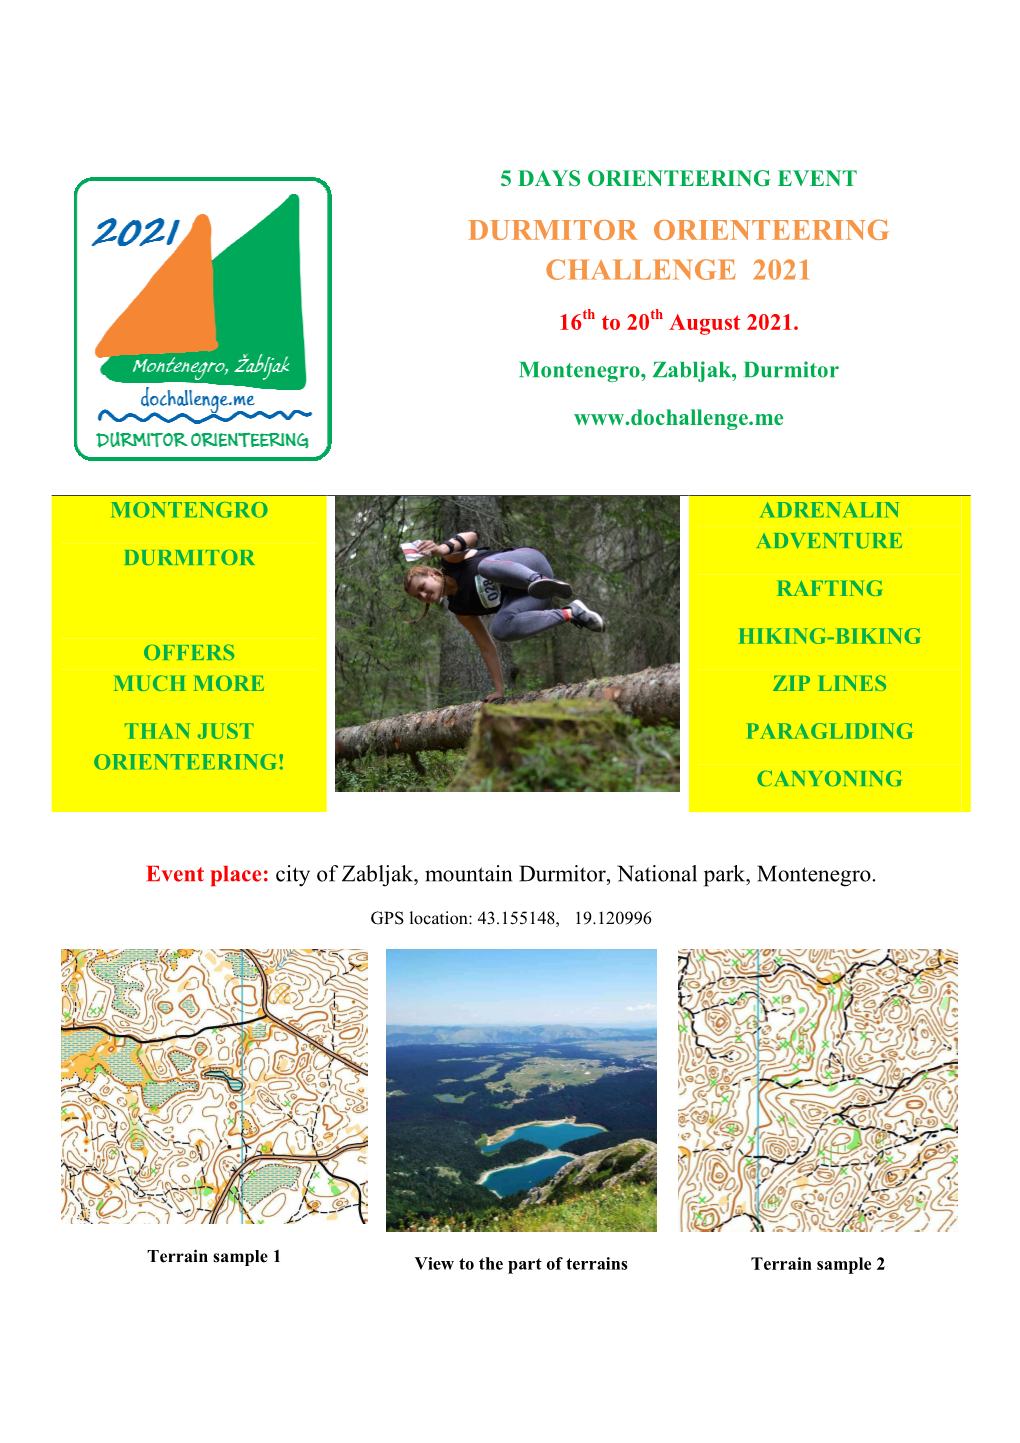 Durmitor Orienteering Challenge 2021